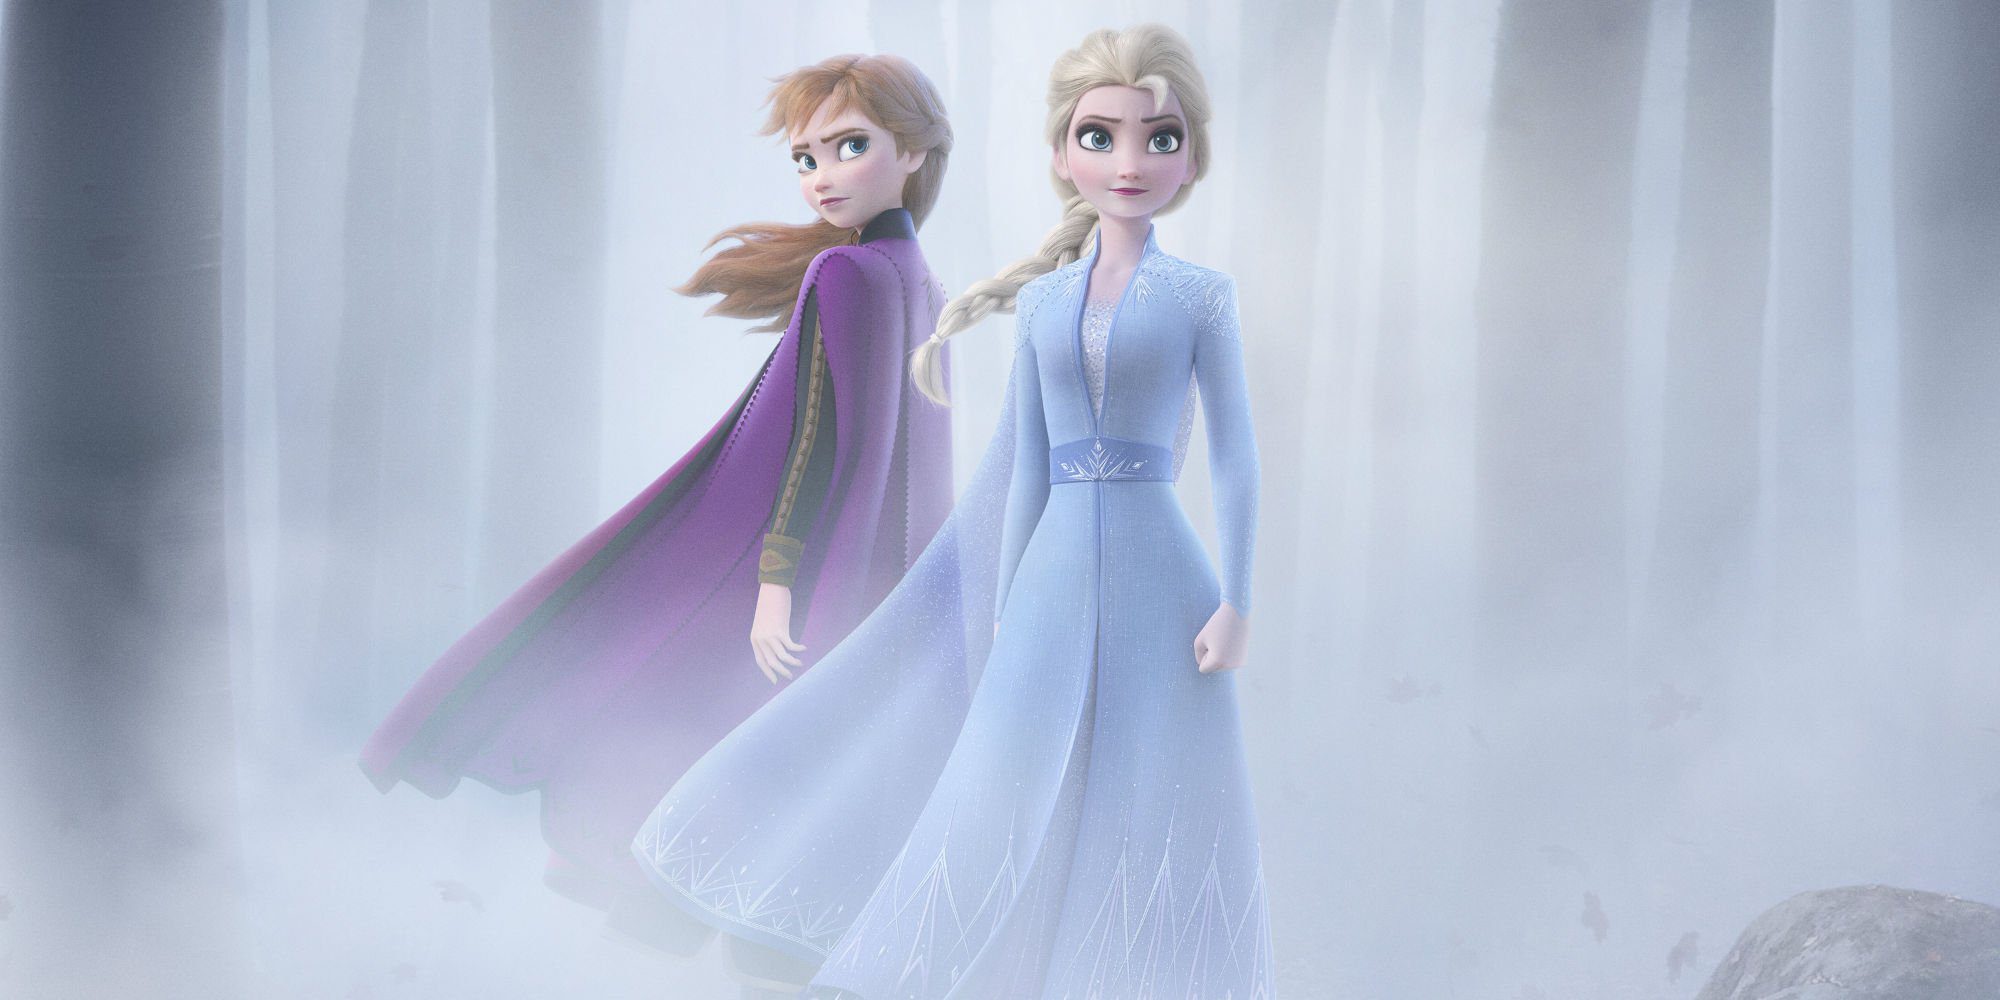 Disney+ Will Start Streaming Frozen 2 This Weekend